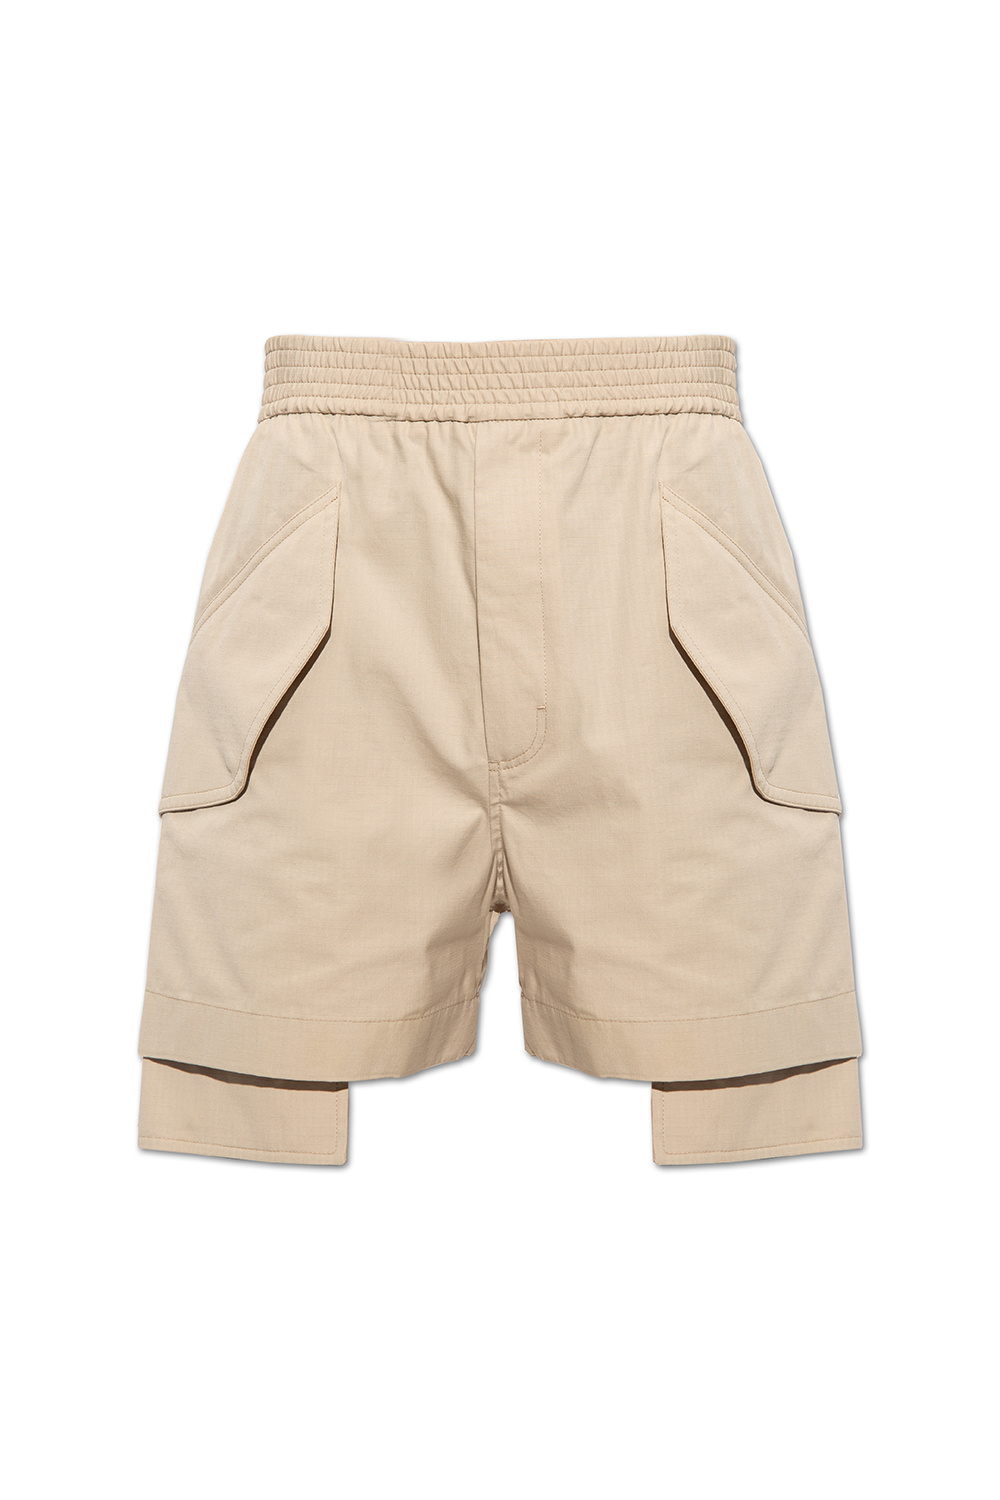 1017 ALYX 9SM Cotton shorts